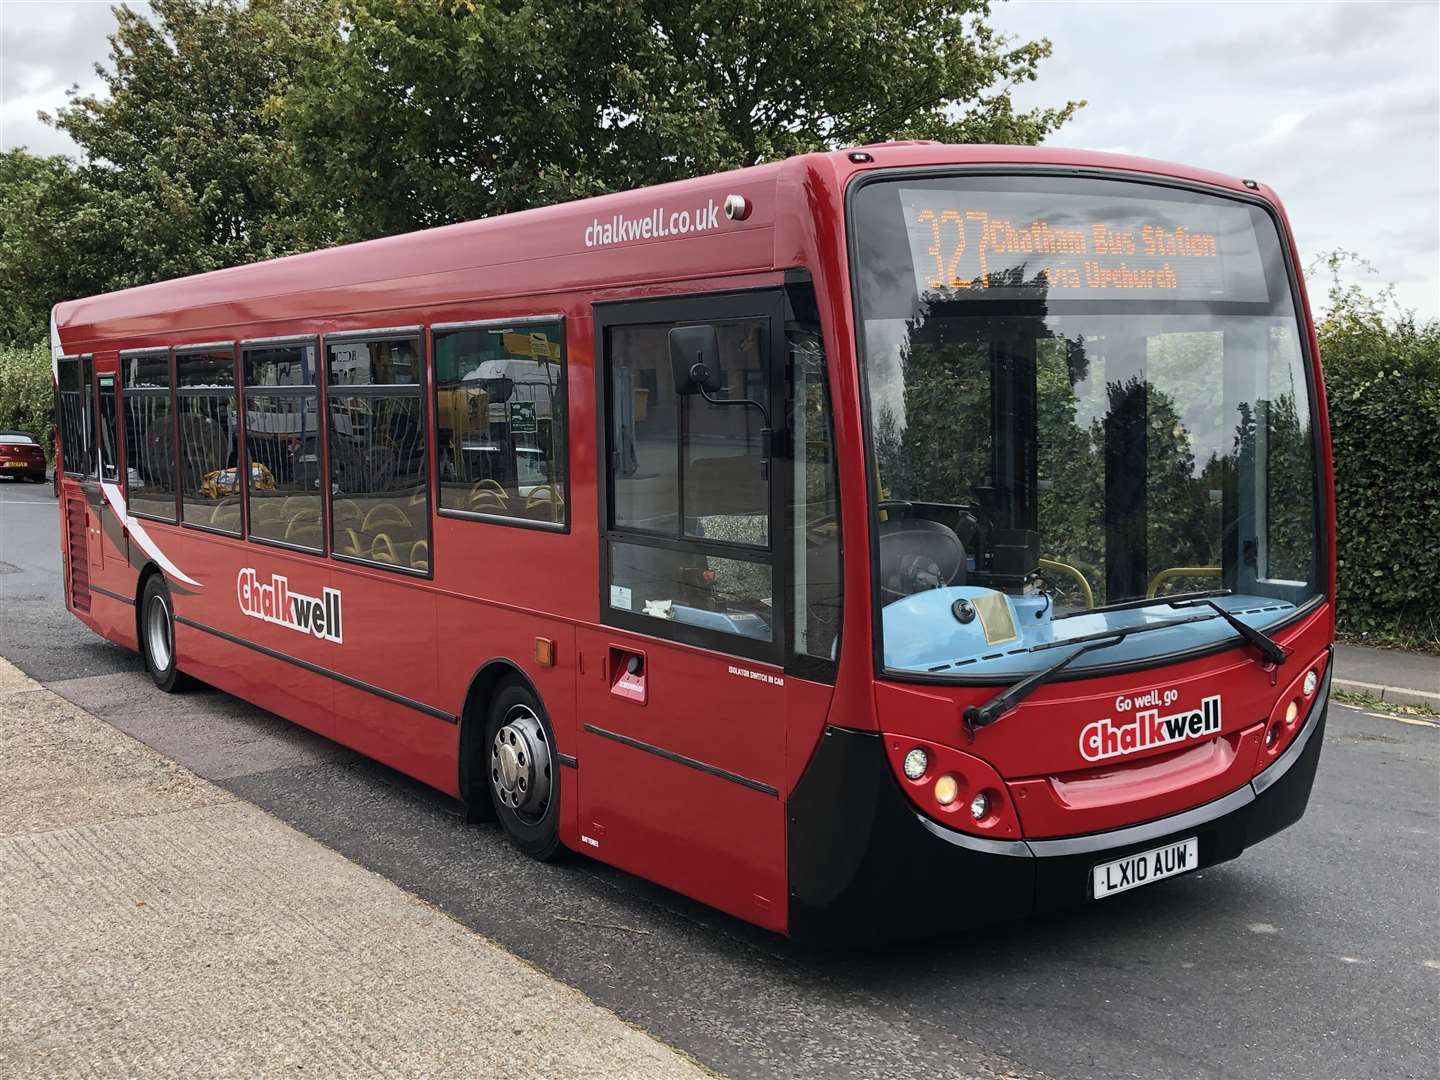 A Chalkwell bus service